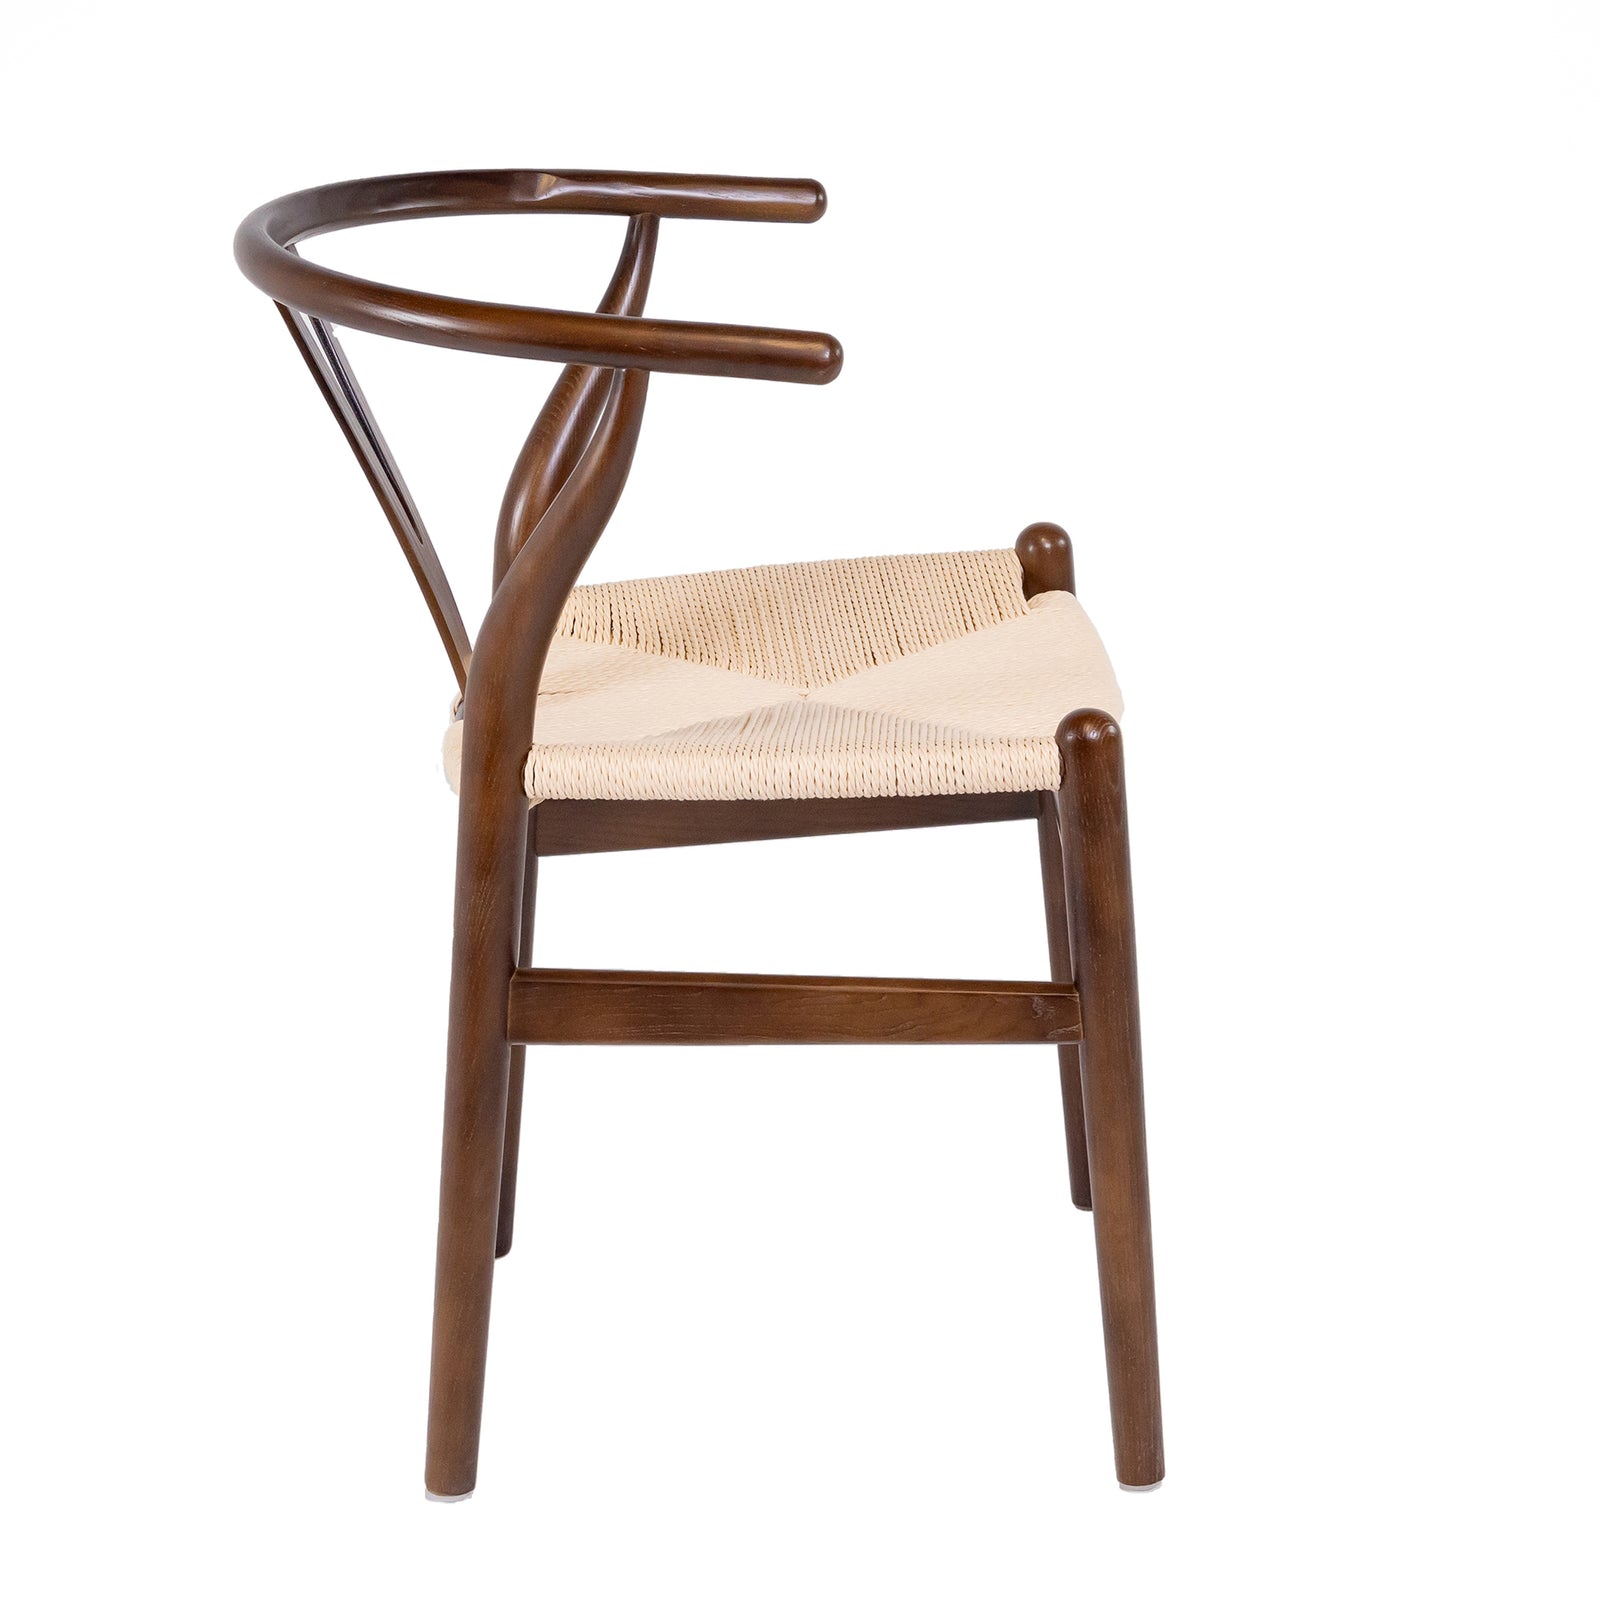 Hans J Wegner style Wishbone Chair - Brown / Natural